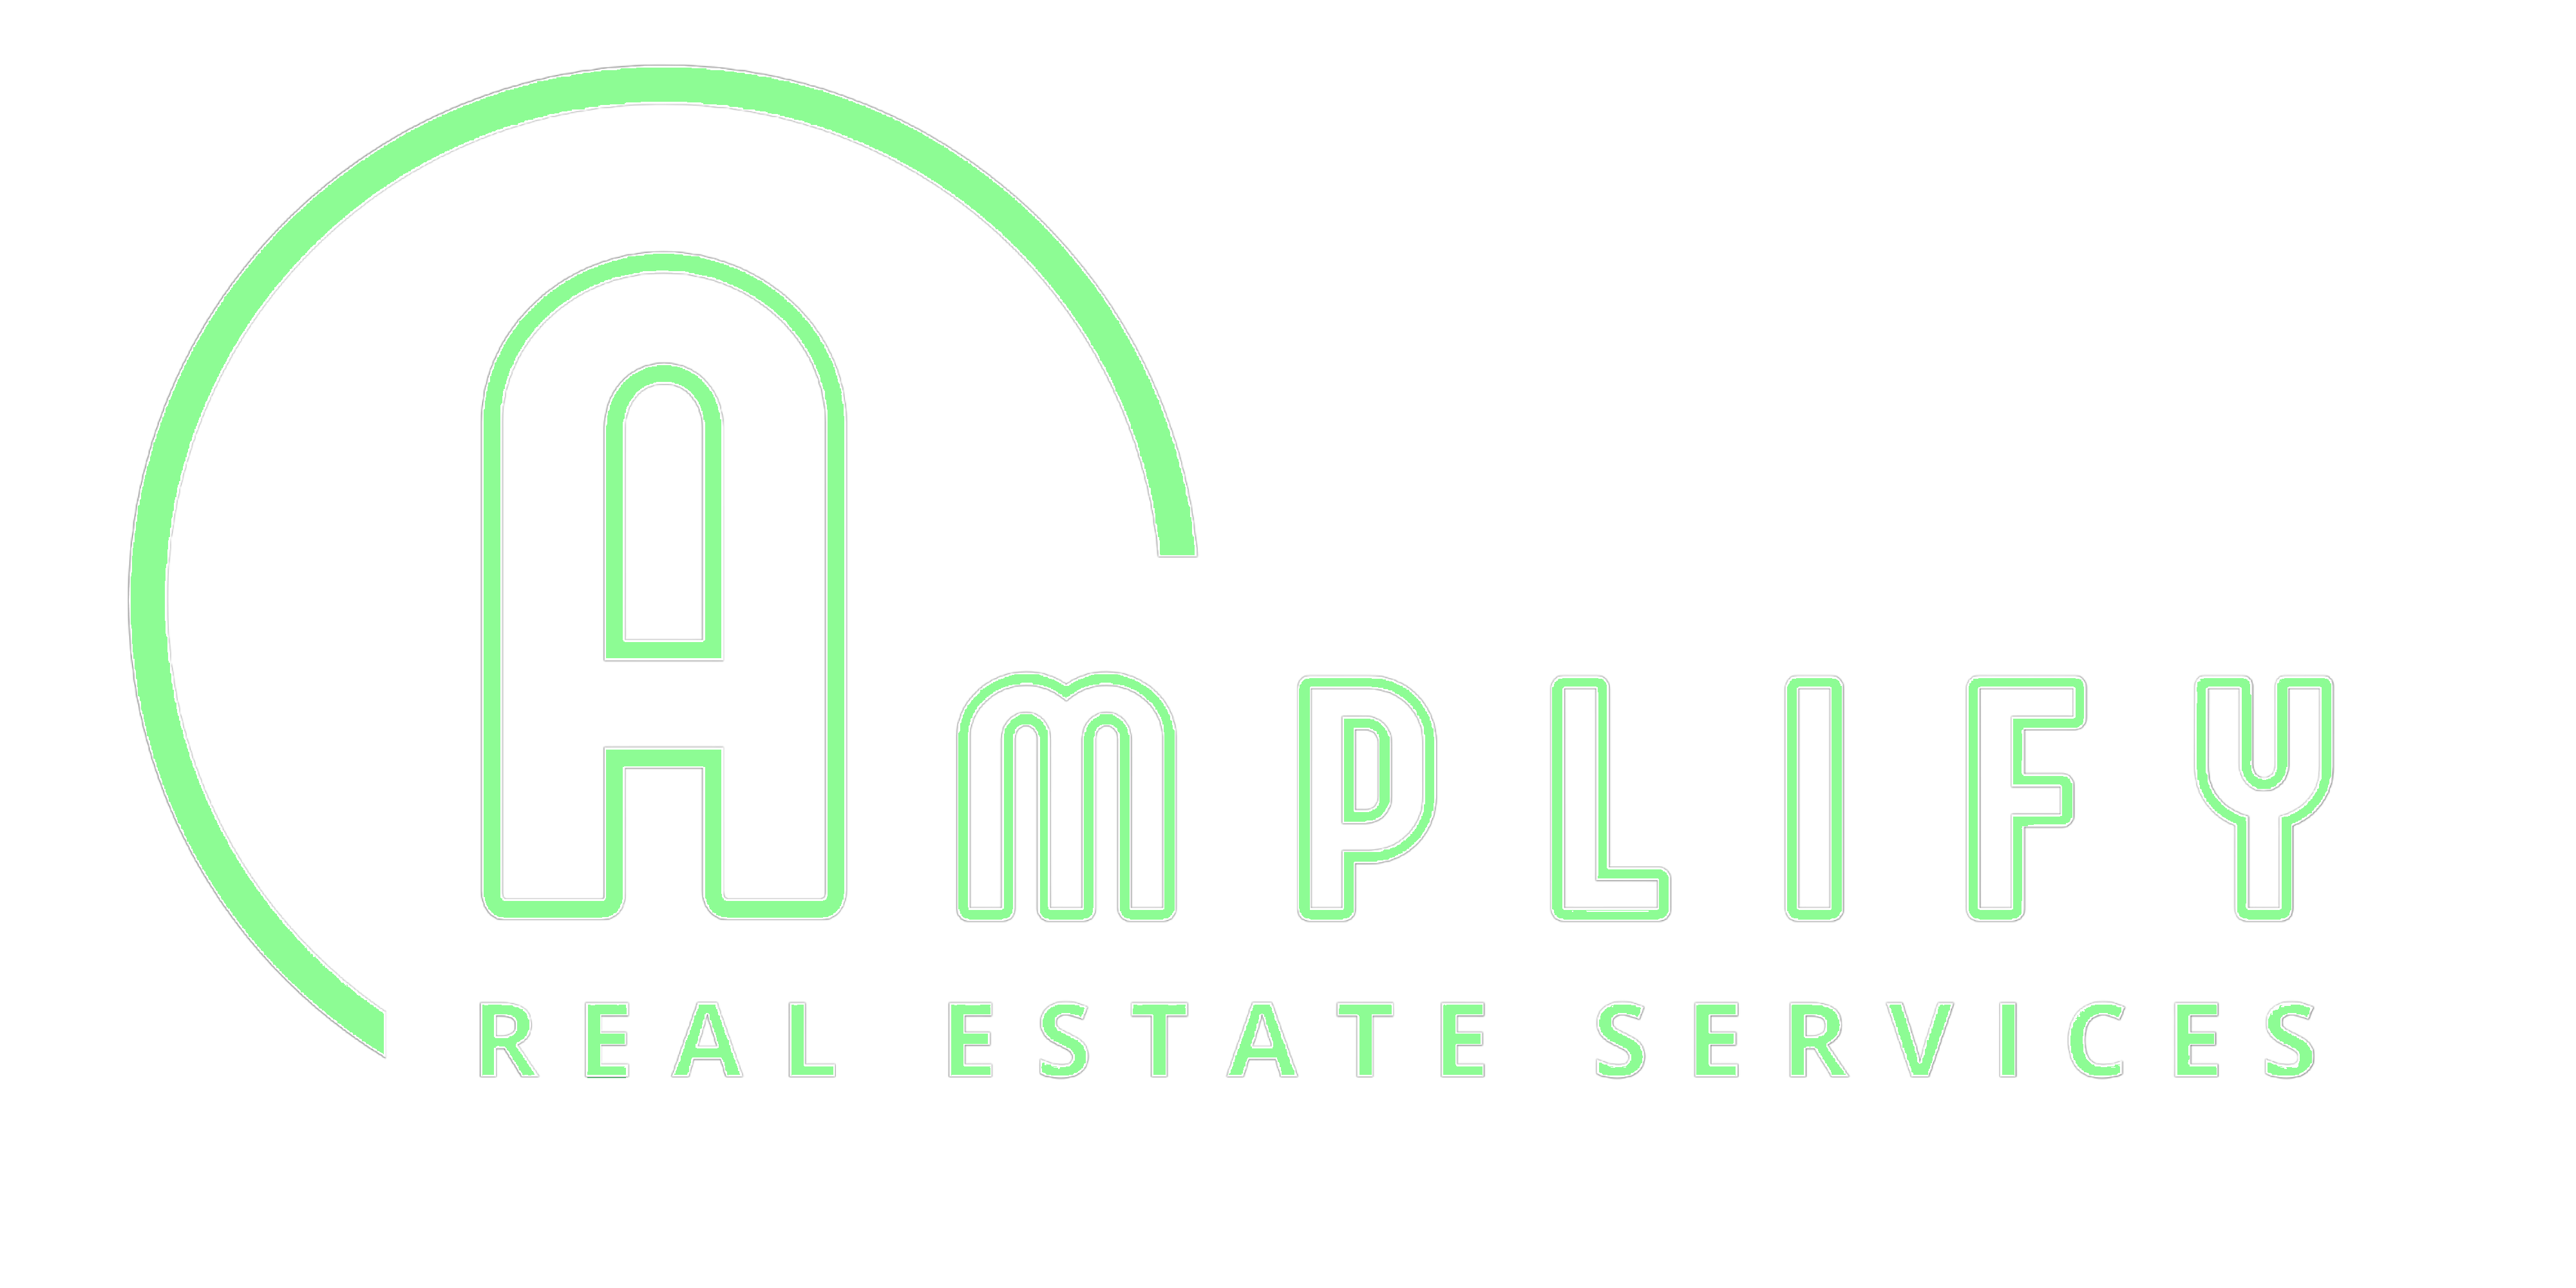 Amplify Logo